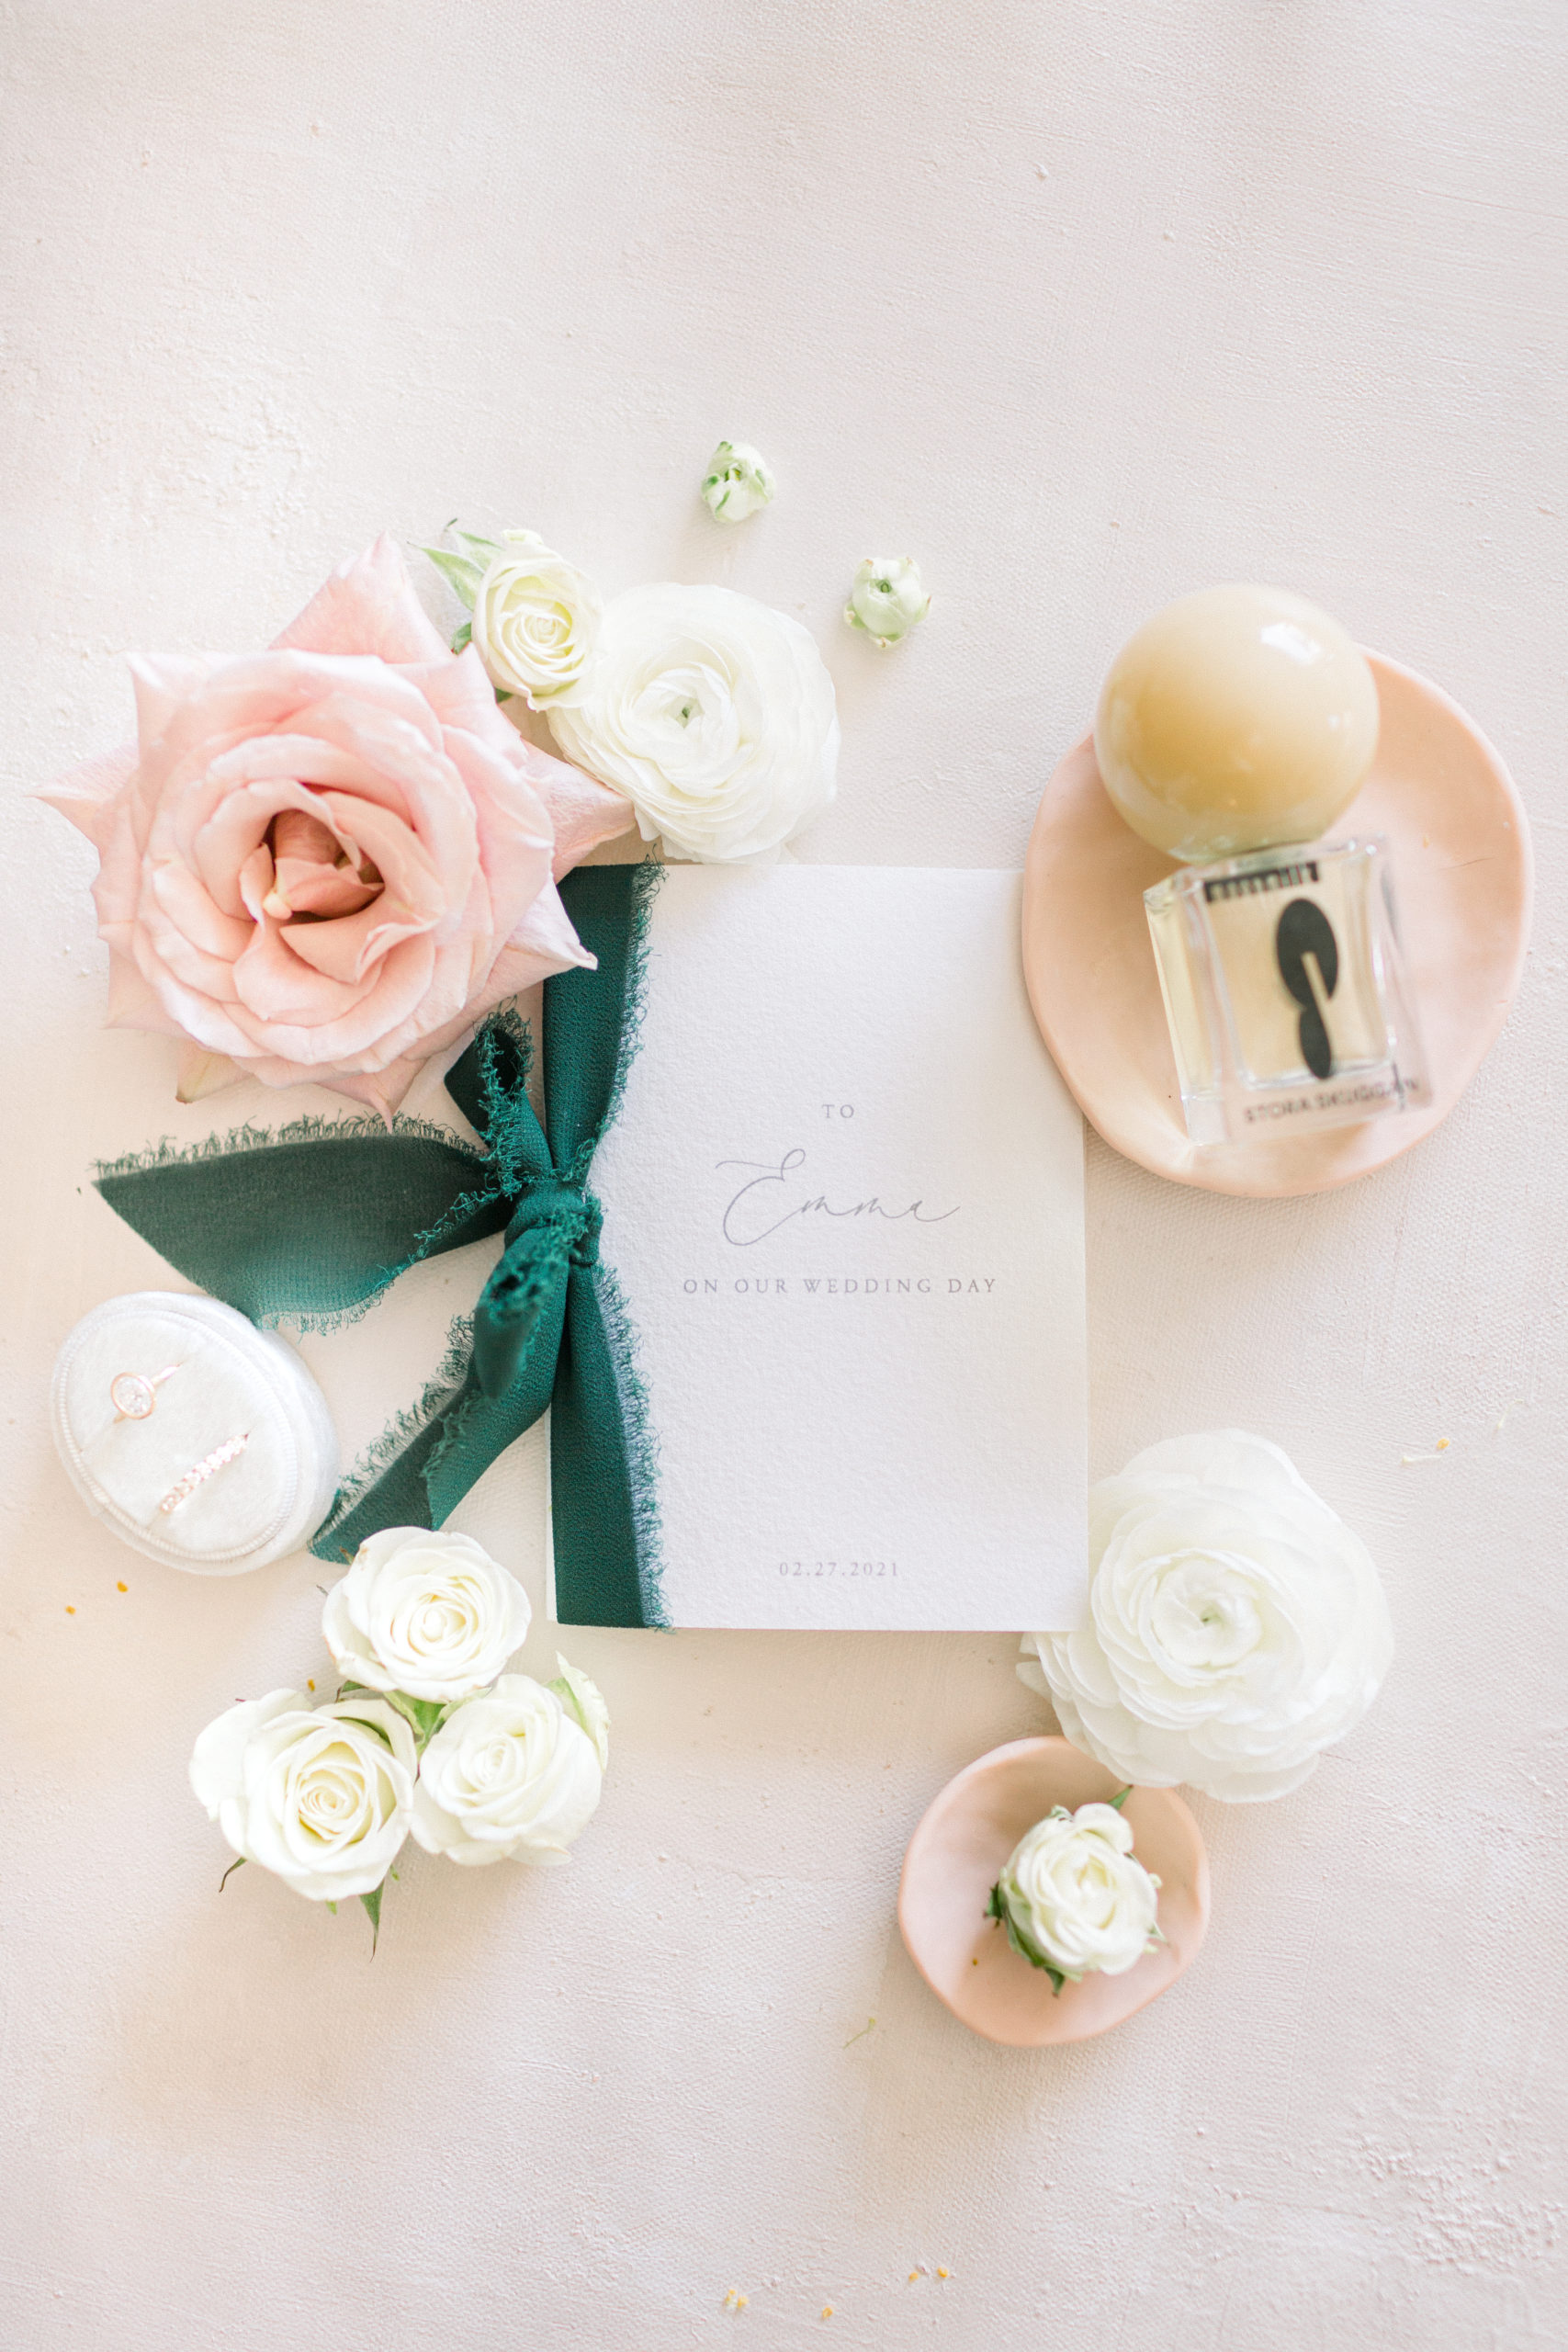 wedding invitation with flowers